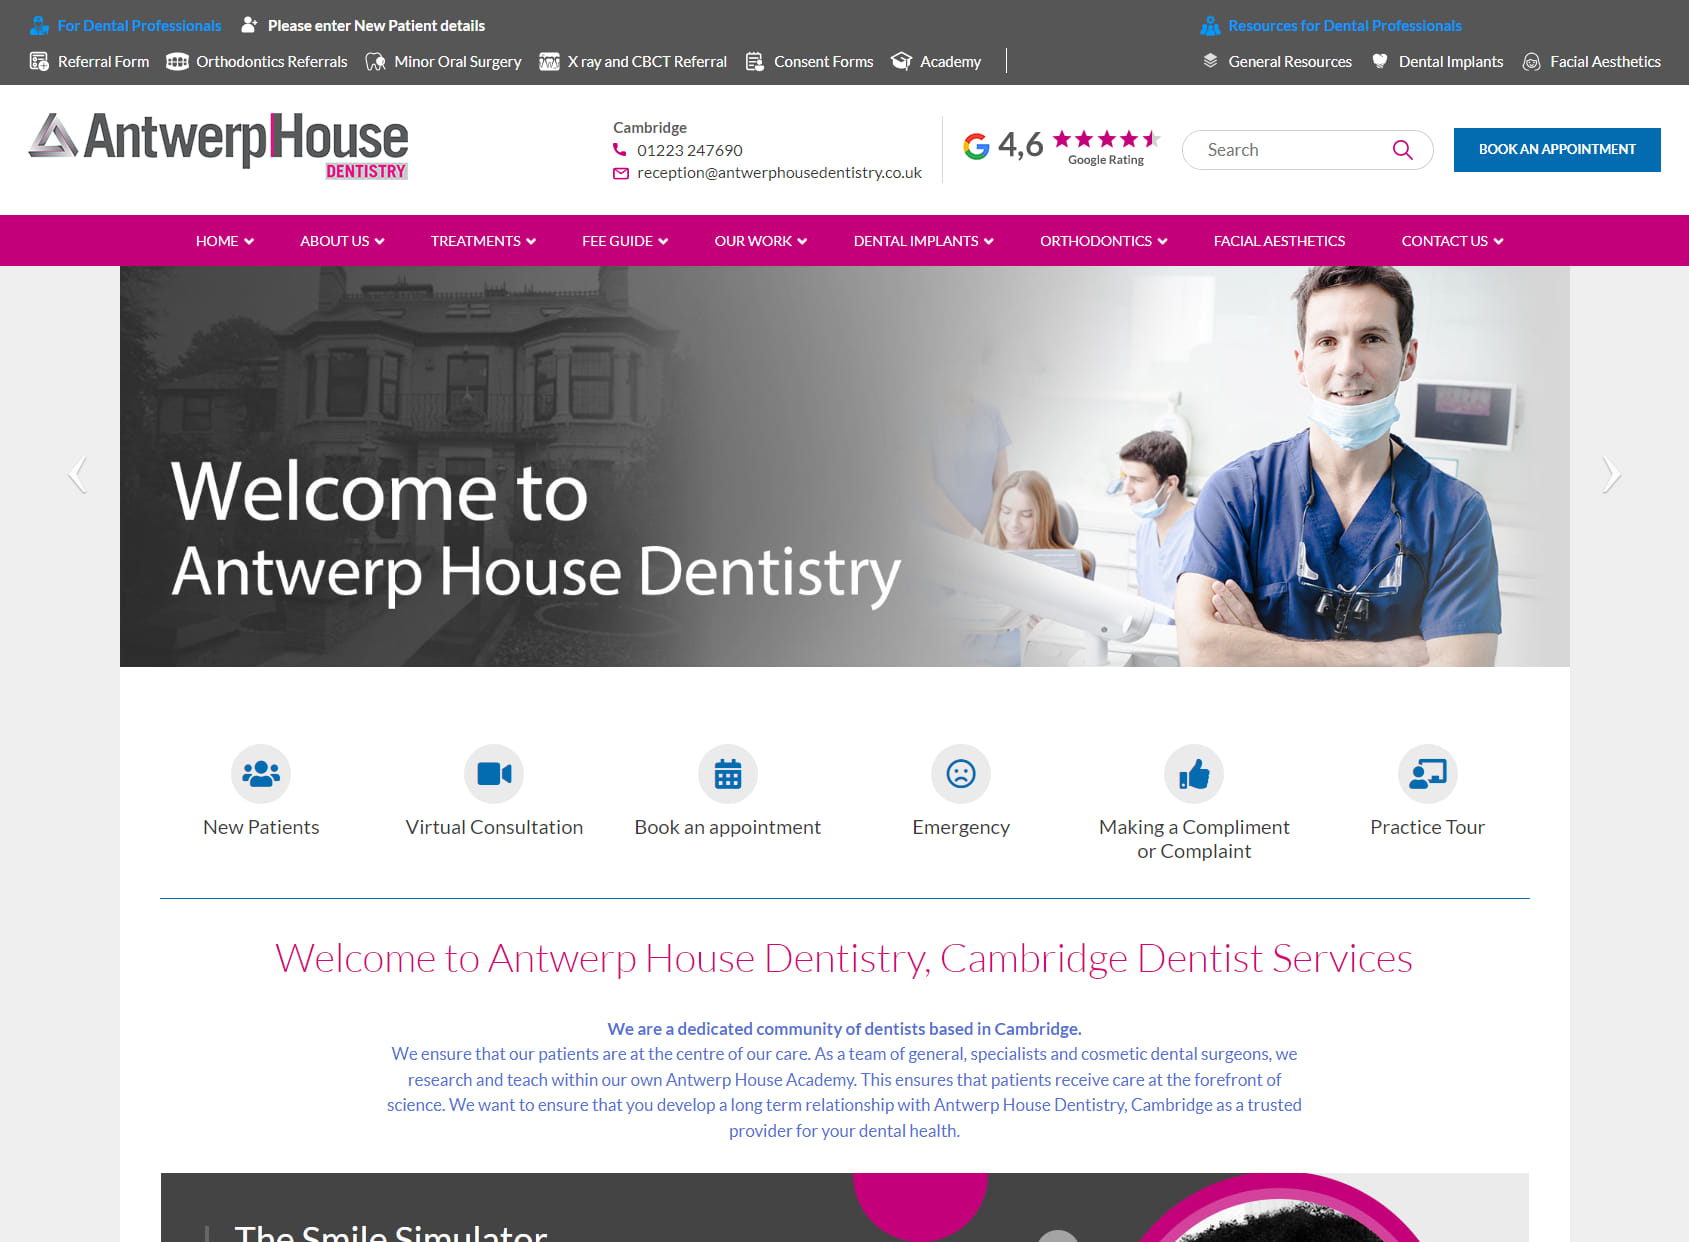 Antwerp House Dentistry Cambridge